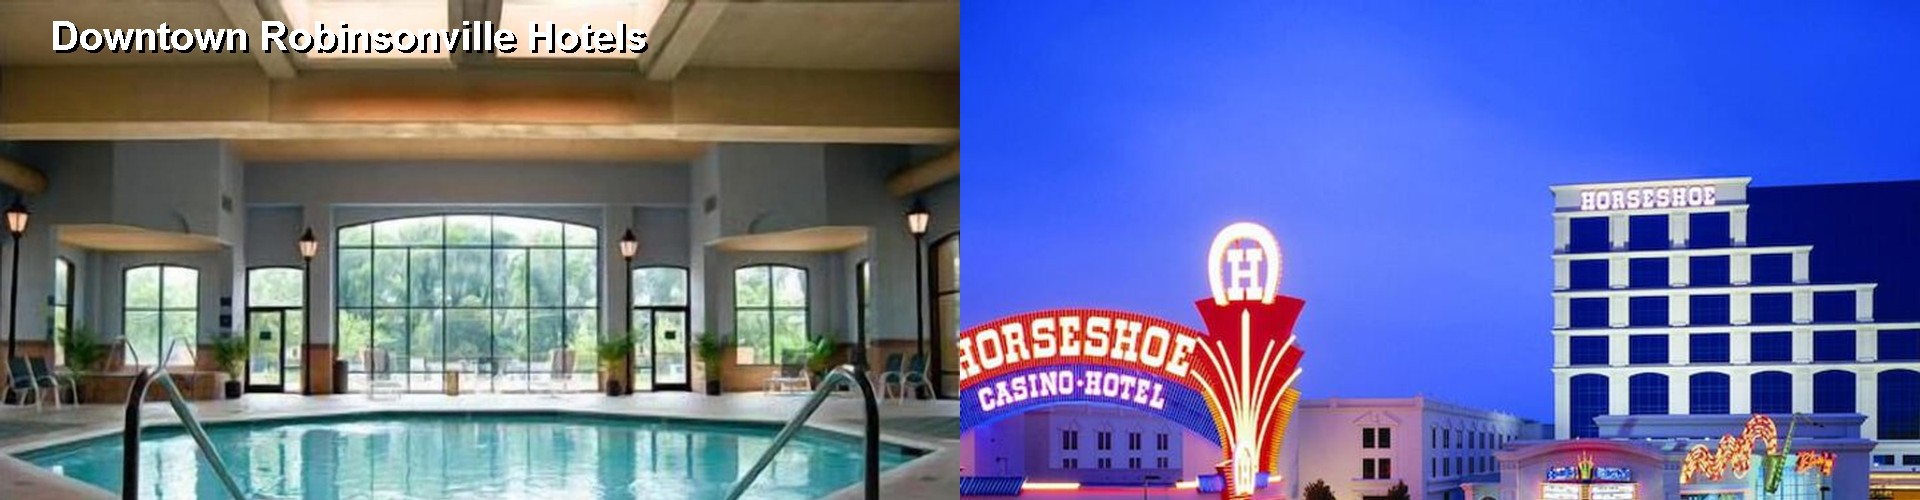 4 Best Hotels near Downtown Robinsonville